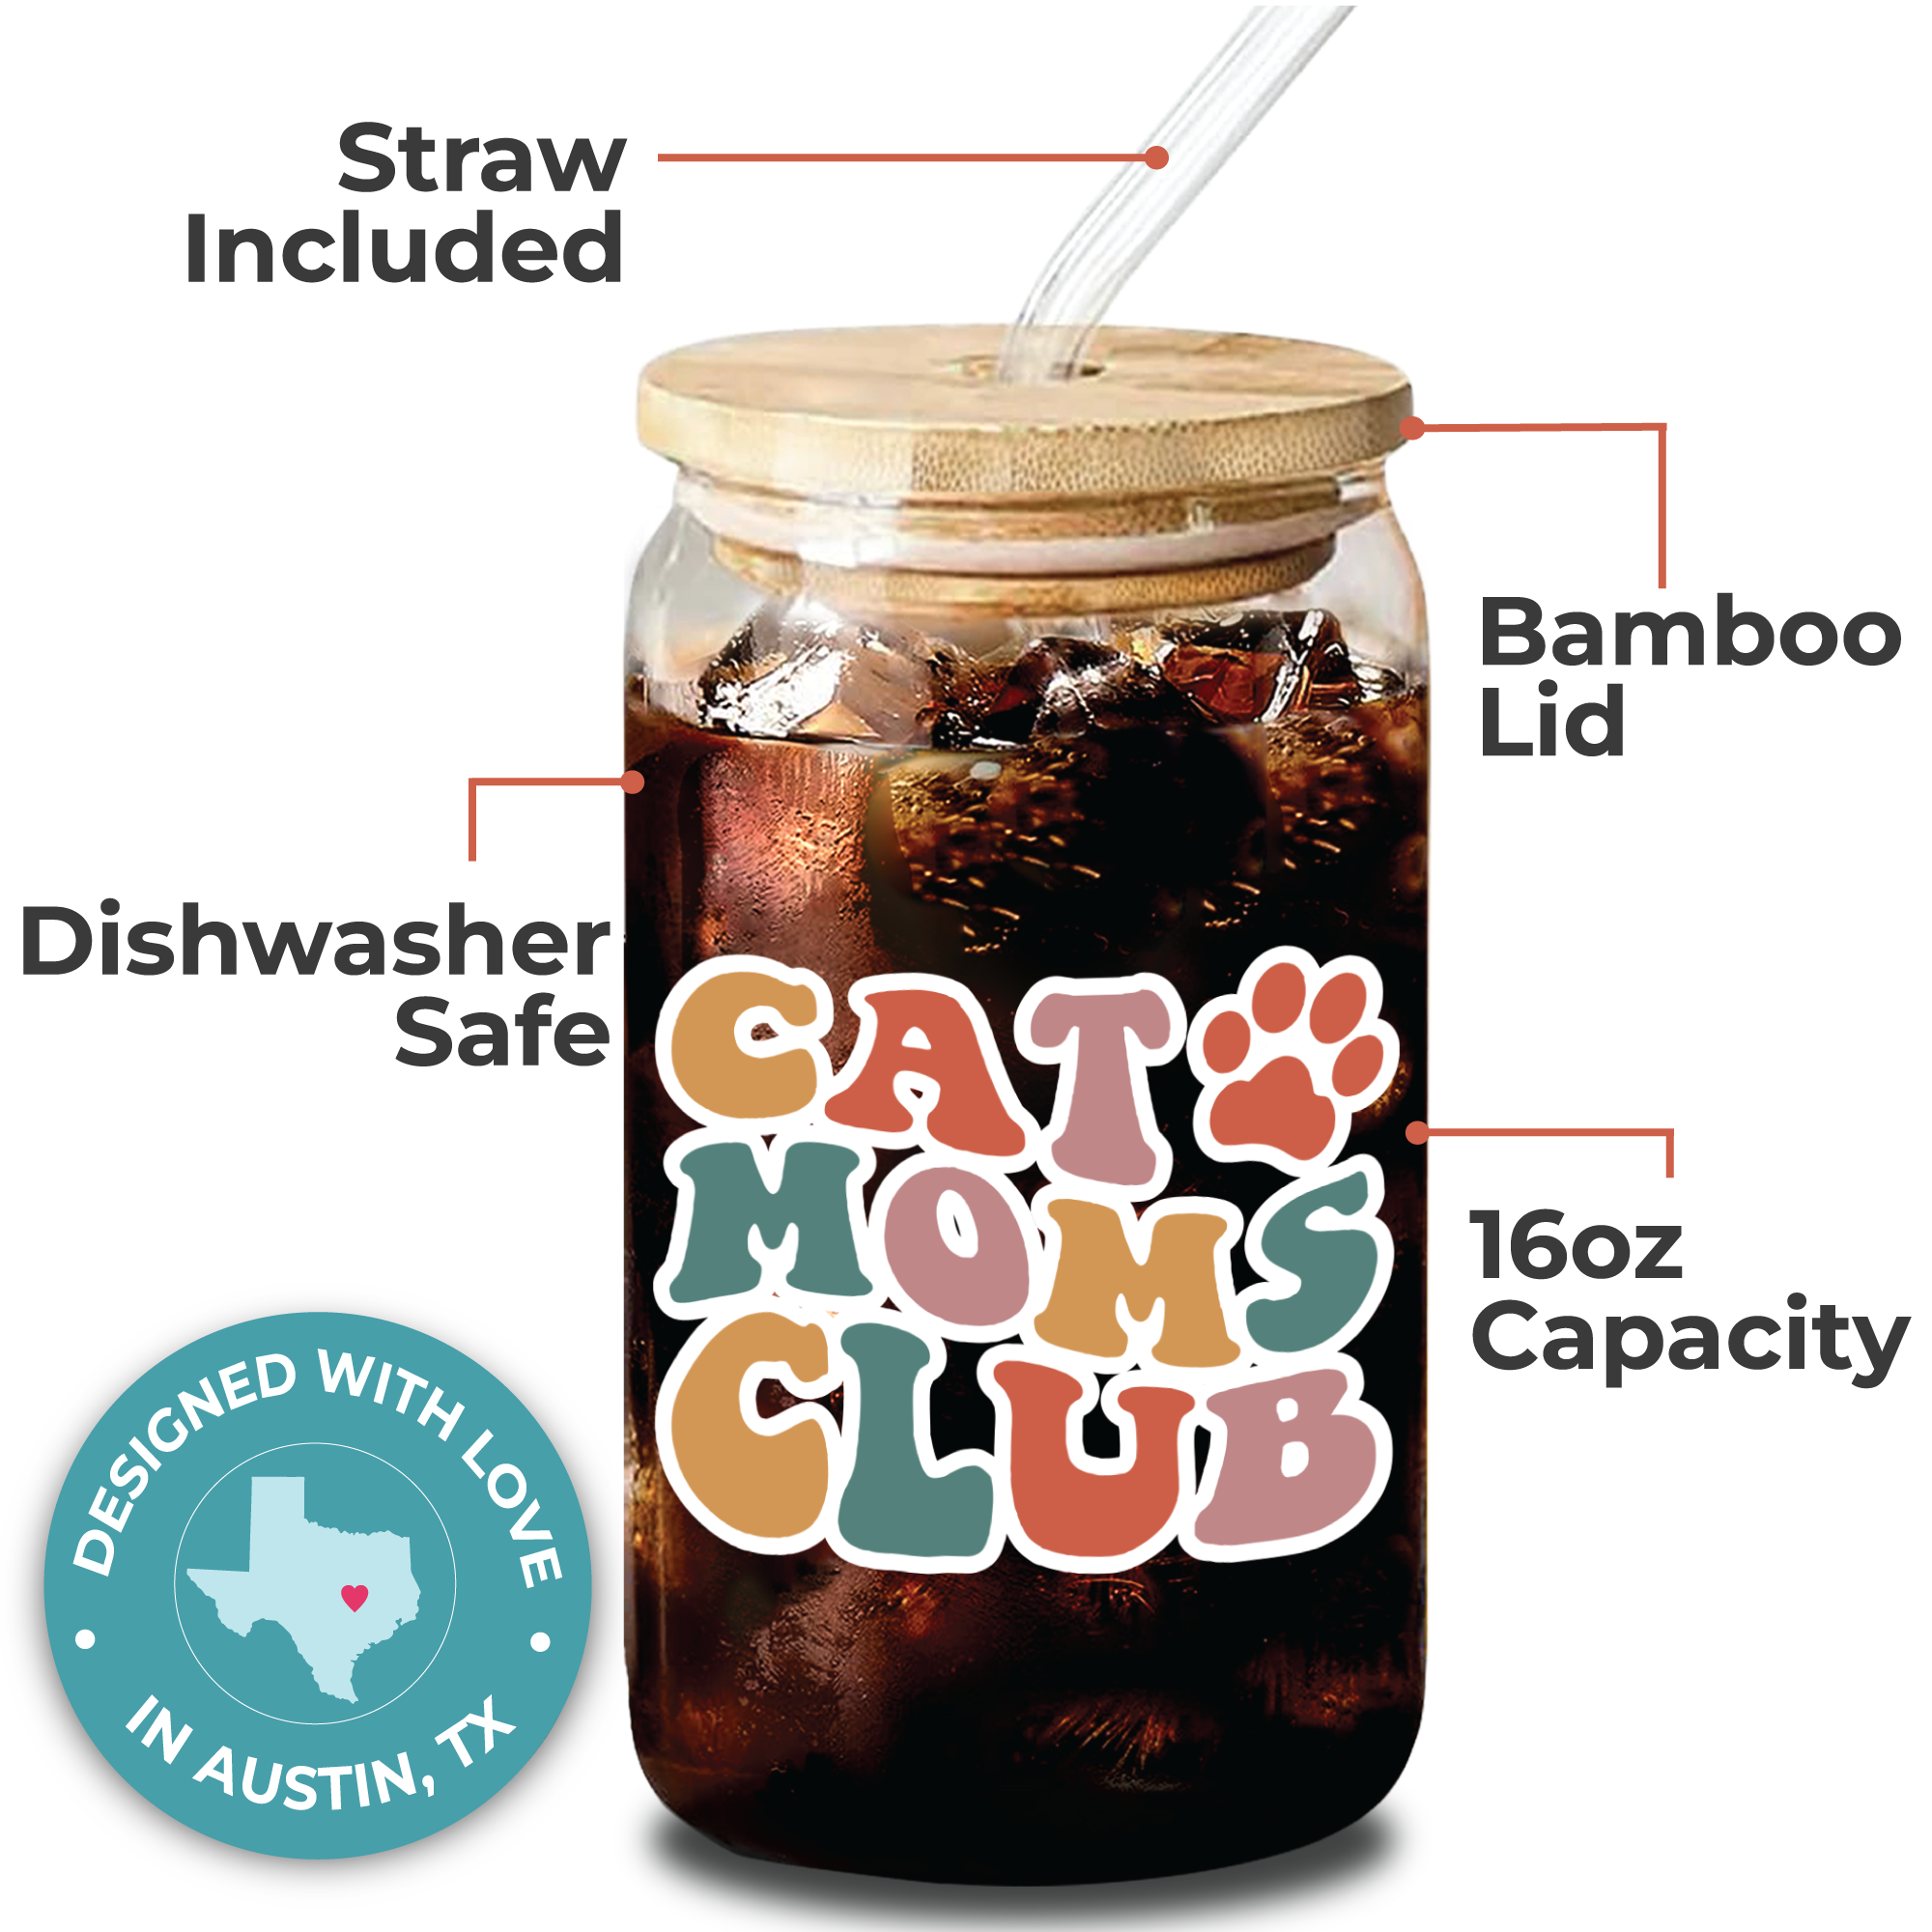 Cat Mom Club Coffee Glass